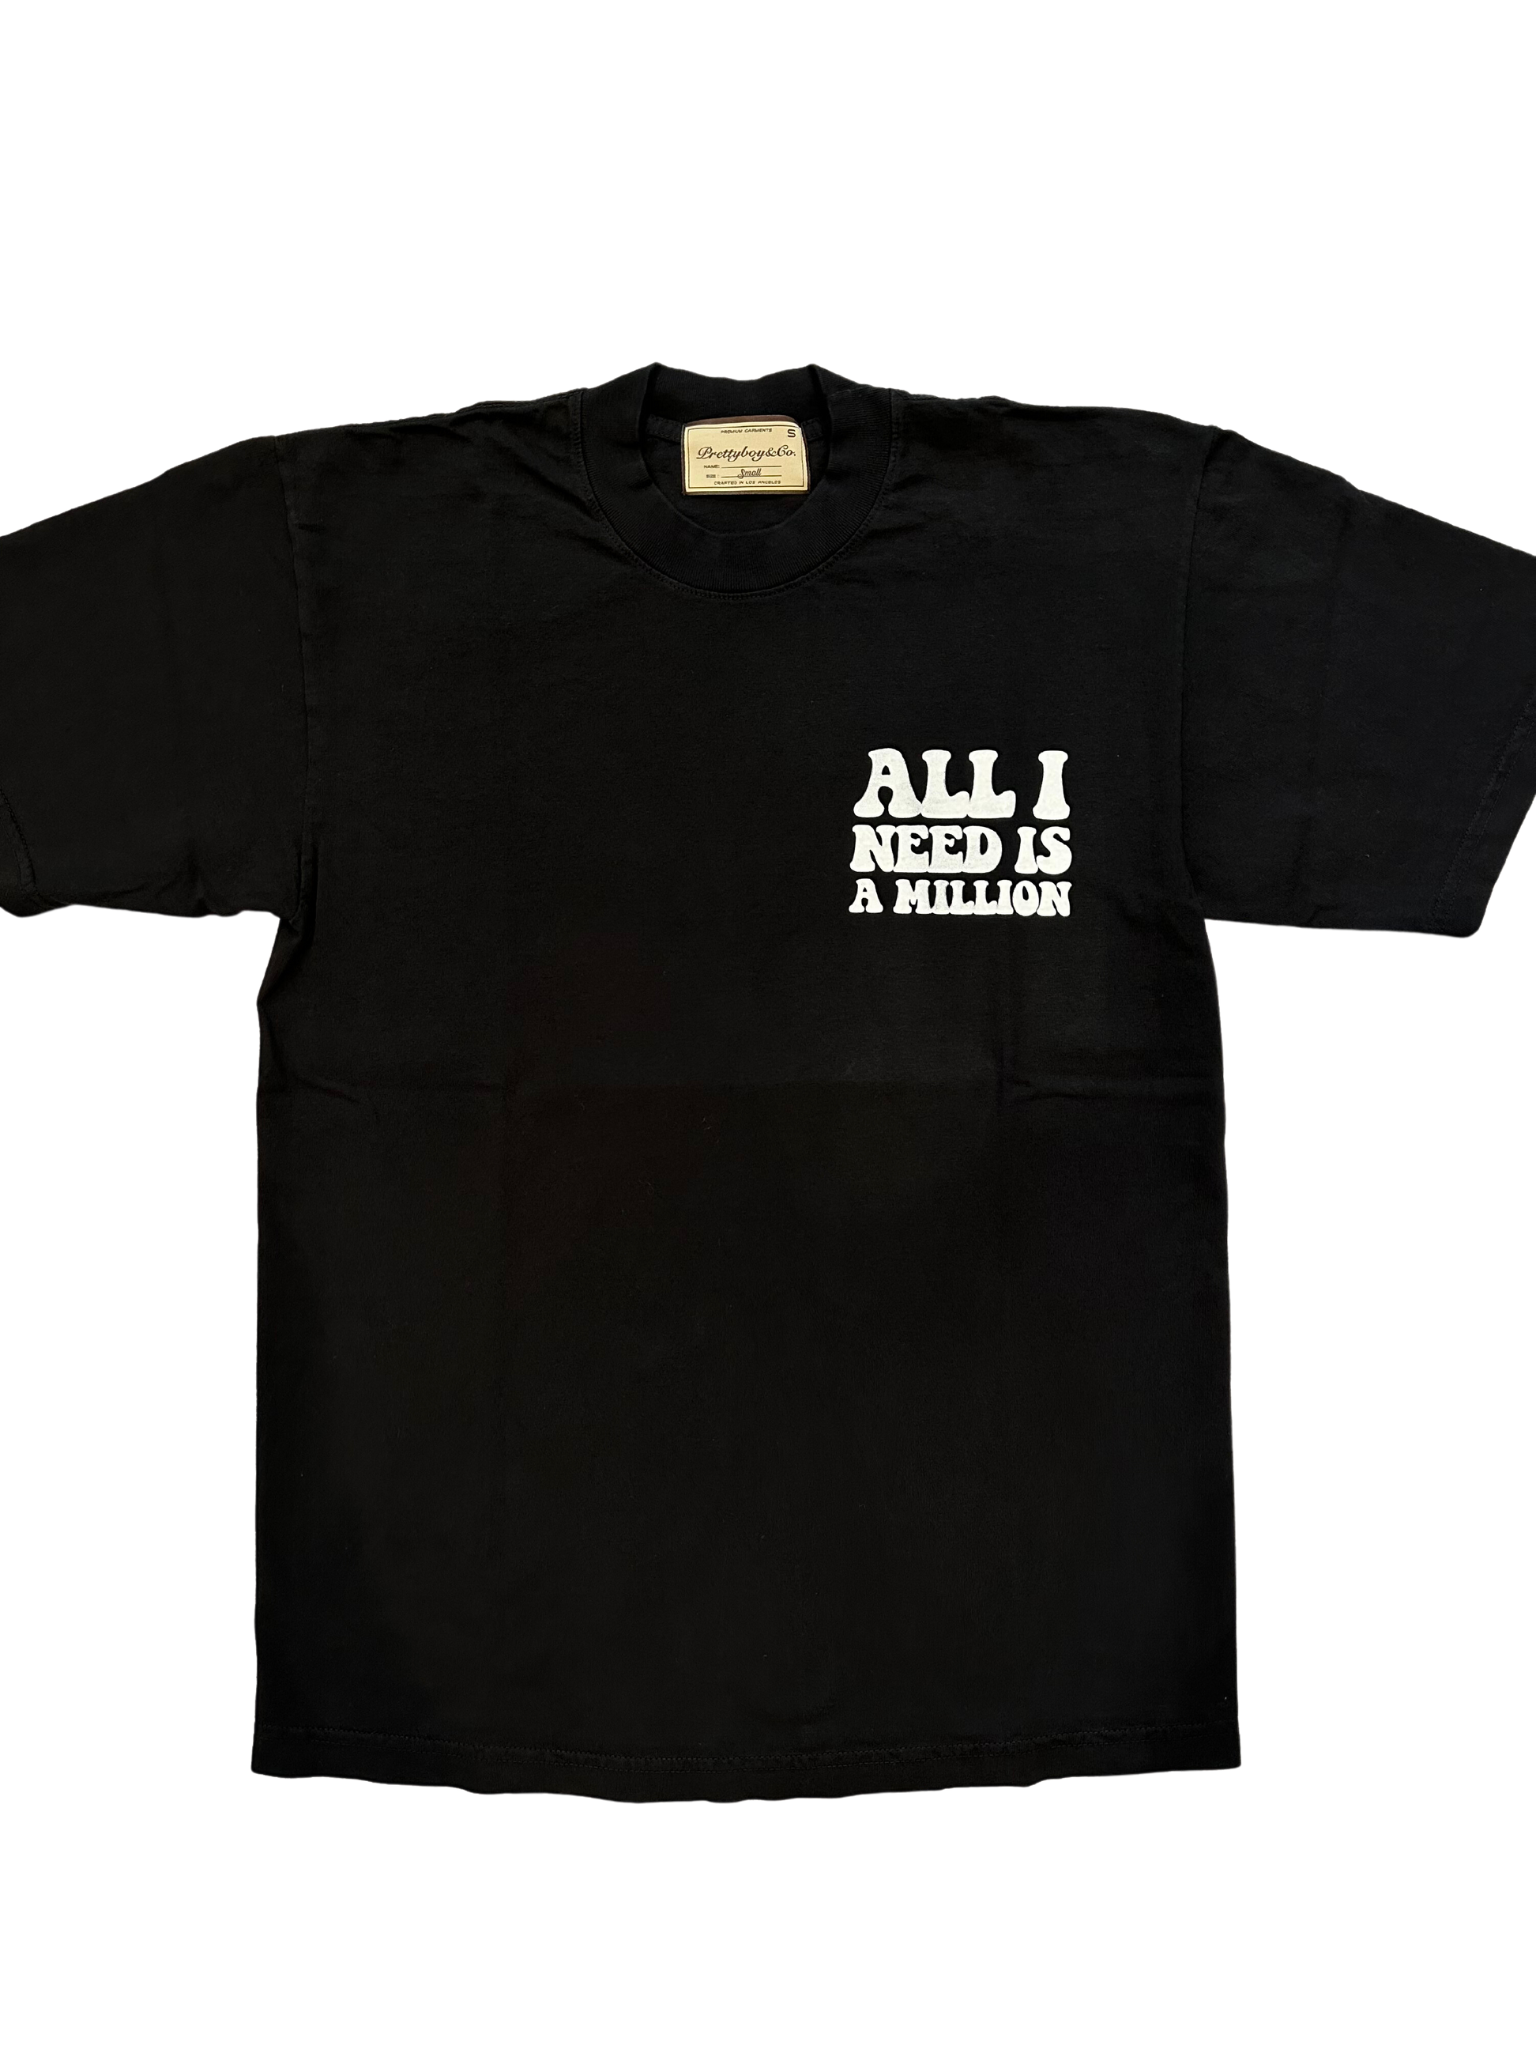 Black "A Milli" T-Shirt (QUICK STRIKE)